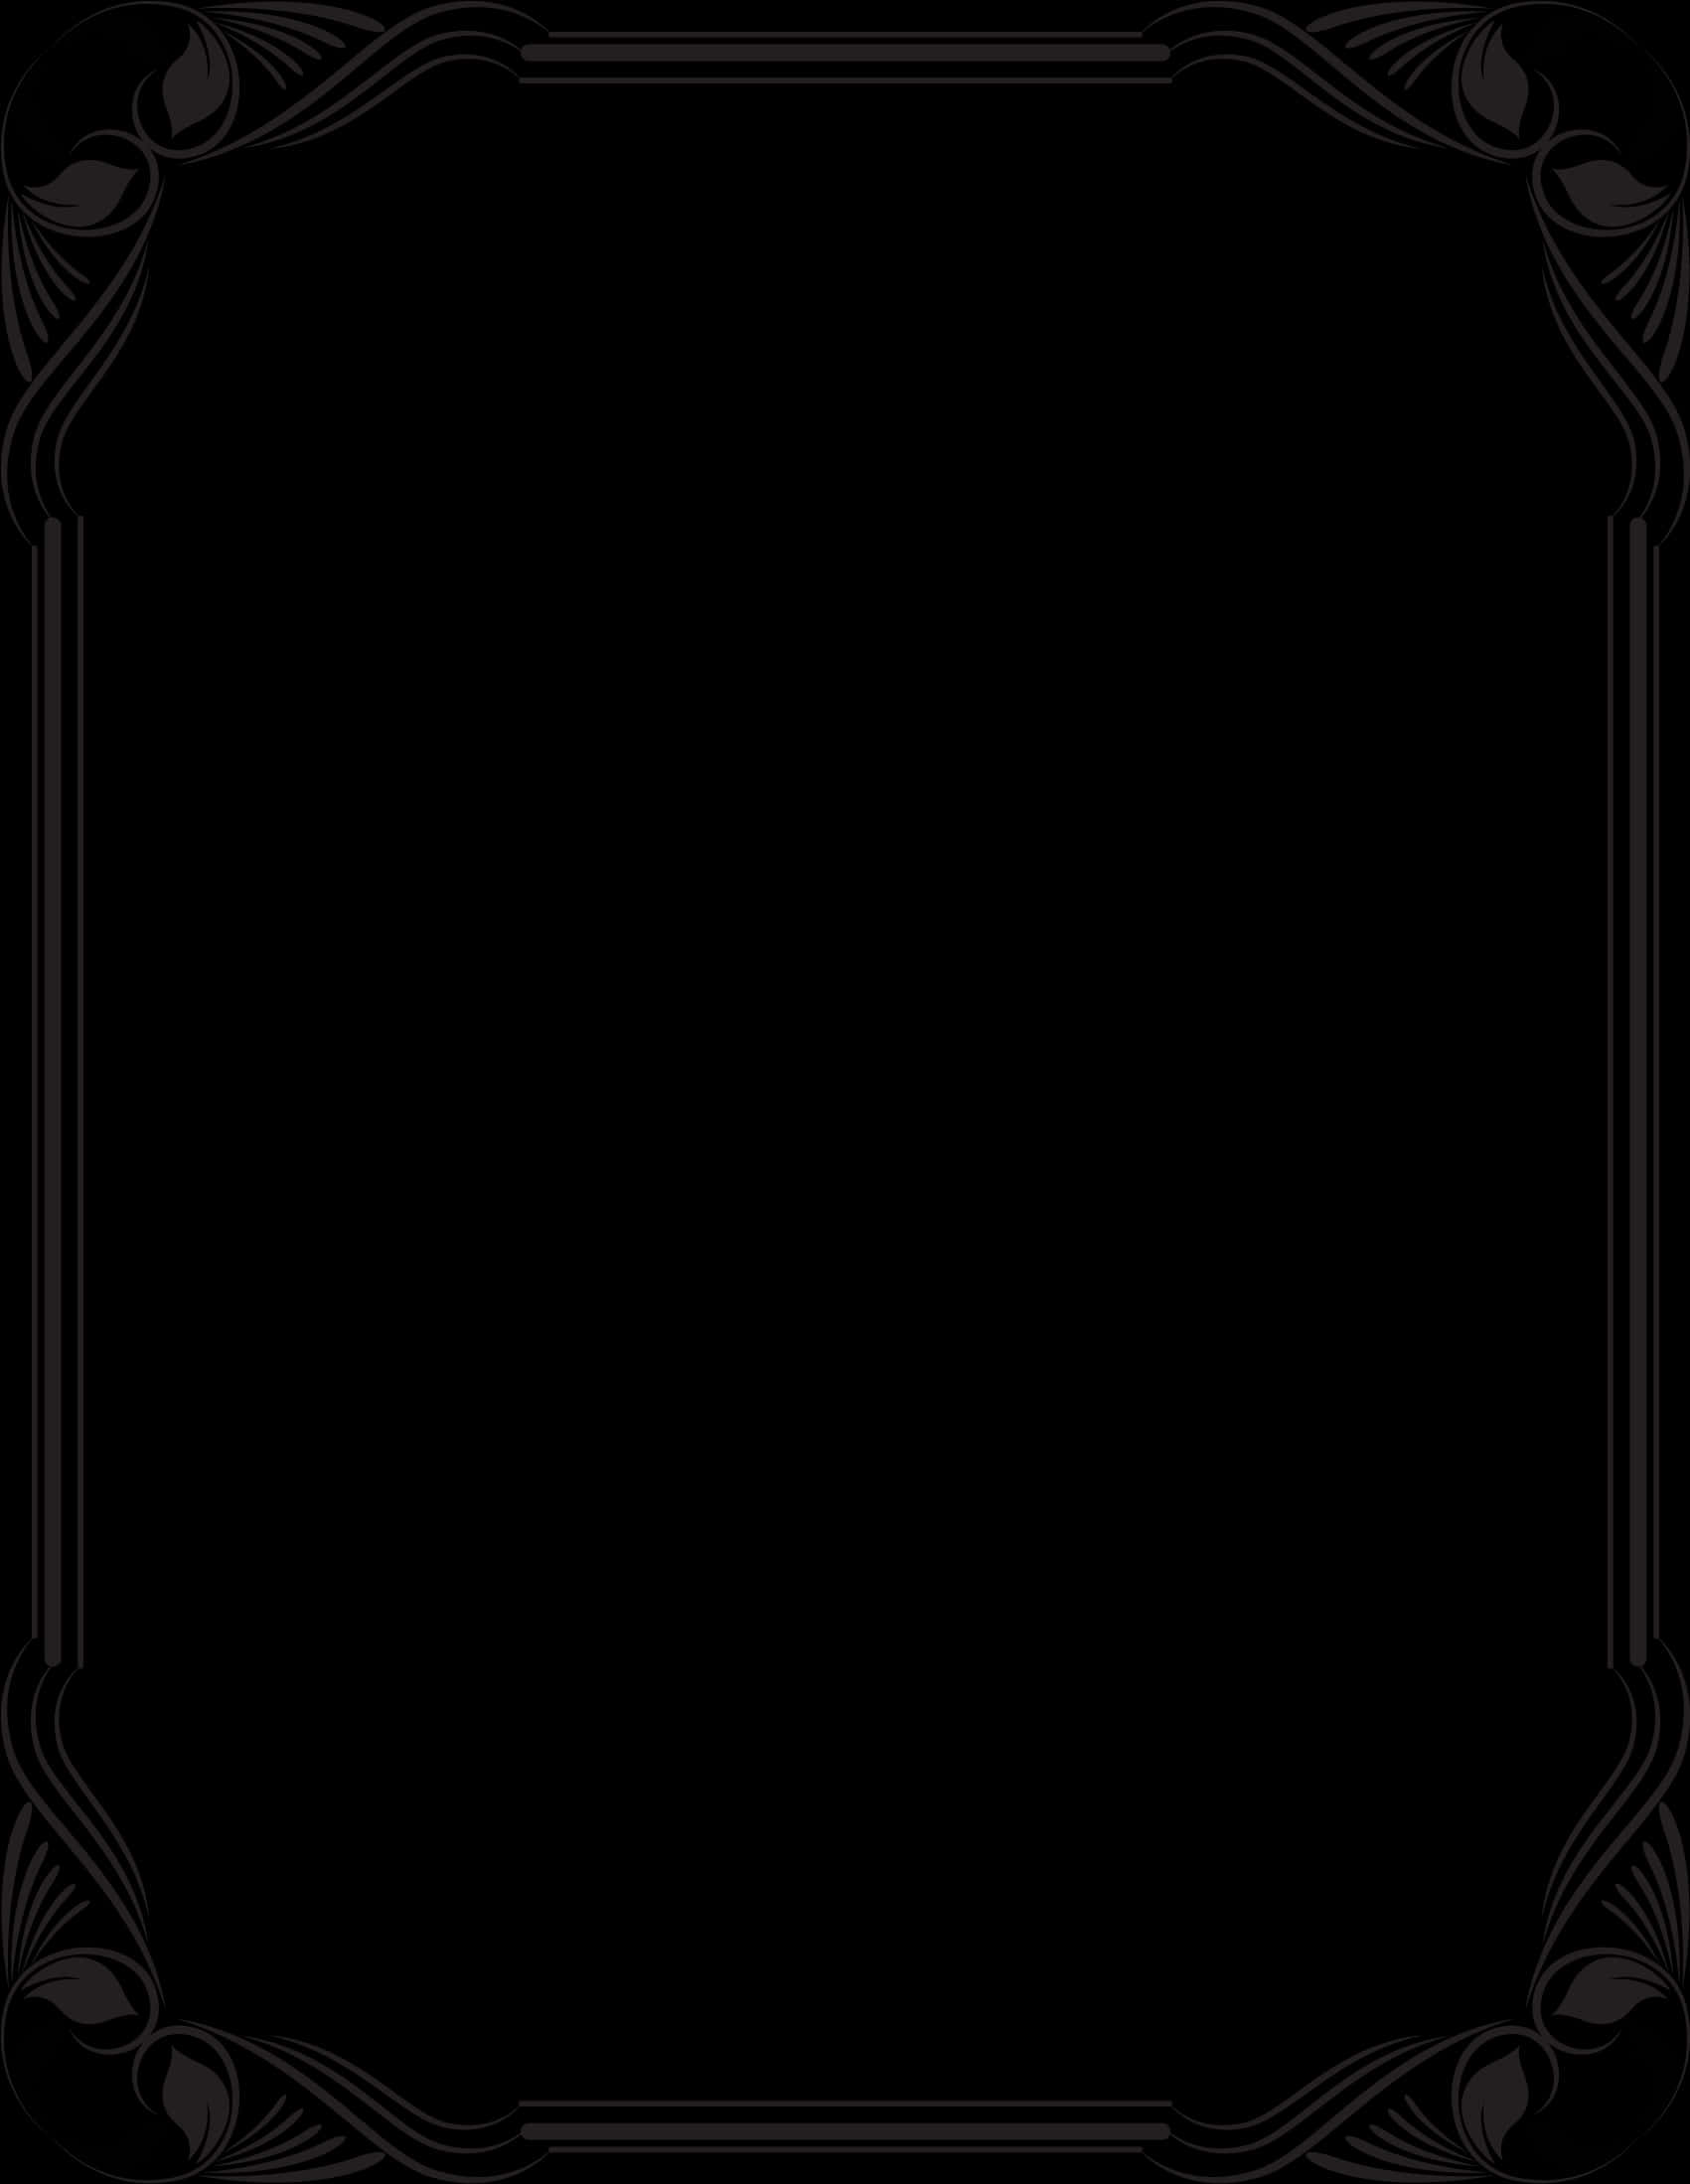 A Black Rectangular Frame With A Black Background